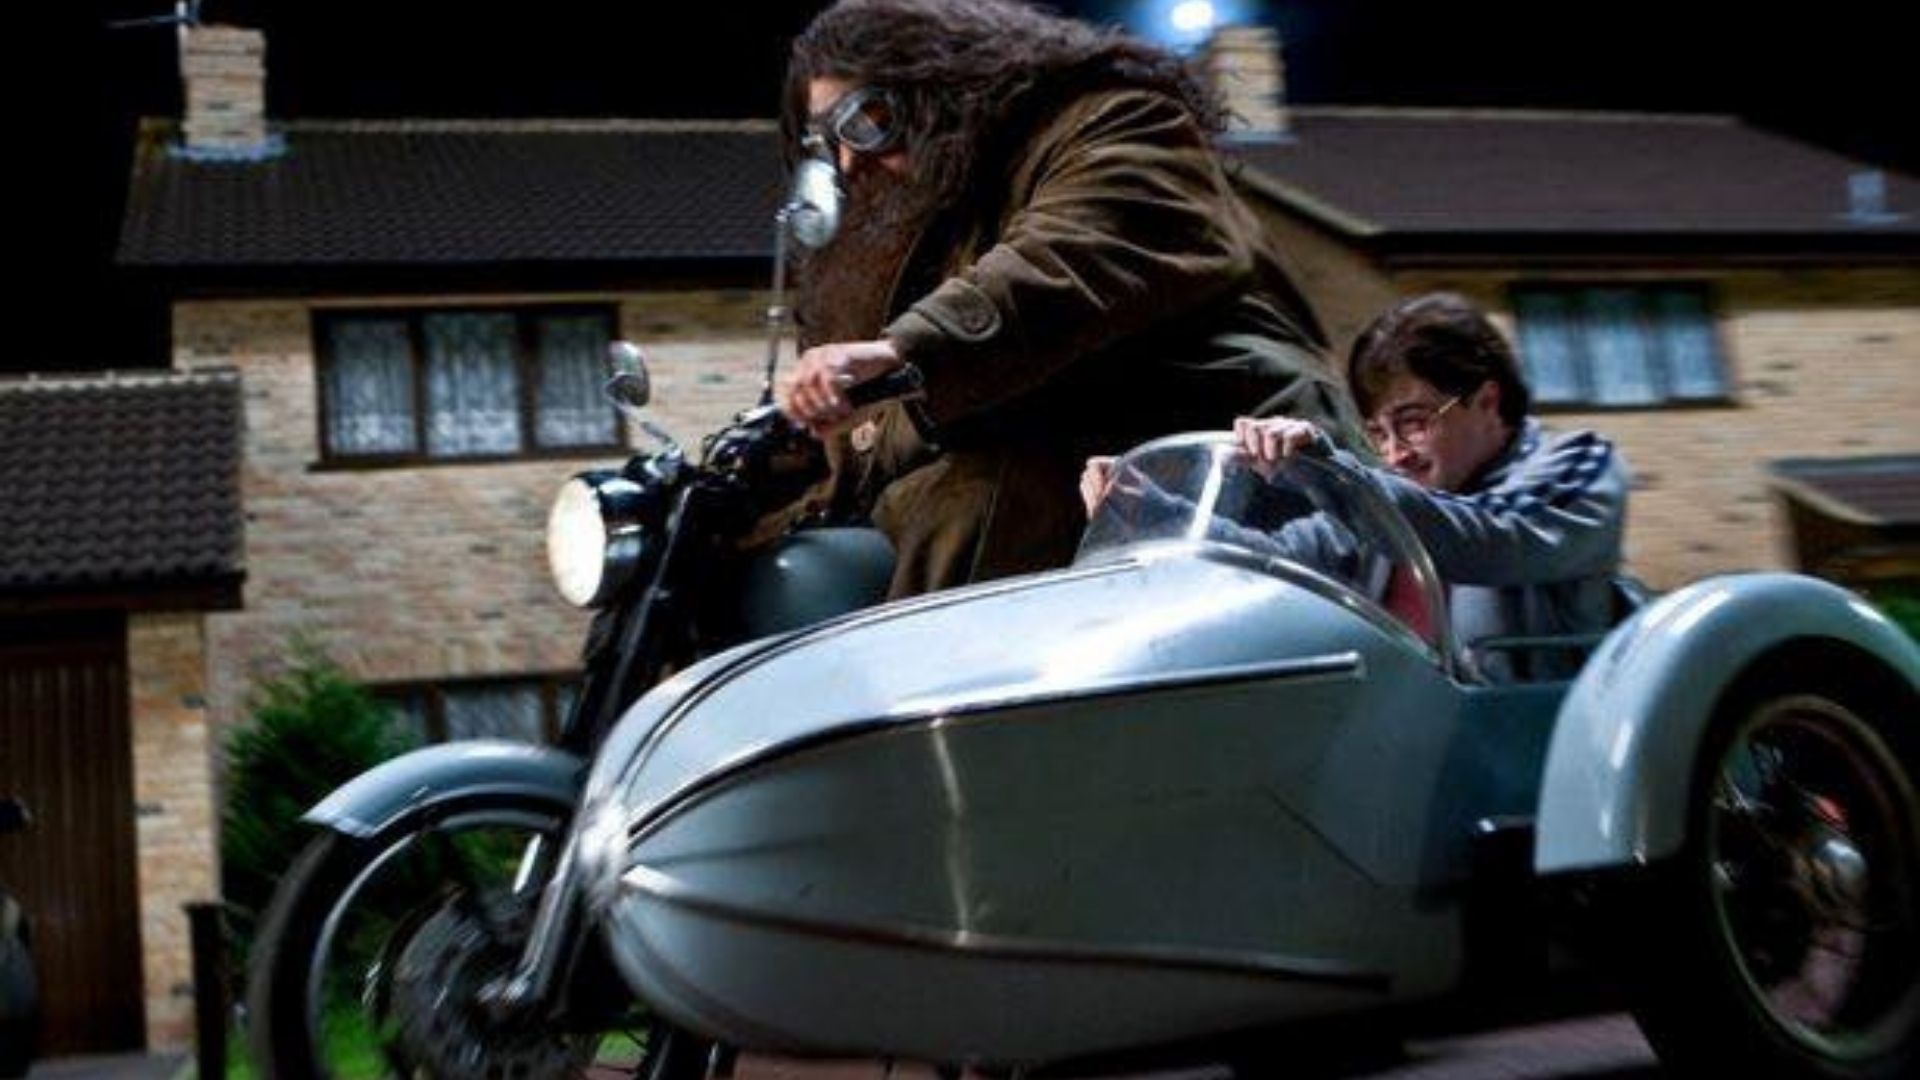 Motorcycle Monday: Hagrid's Motorcycle